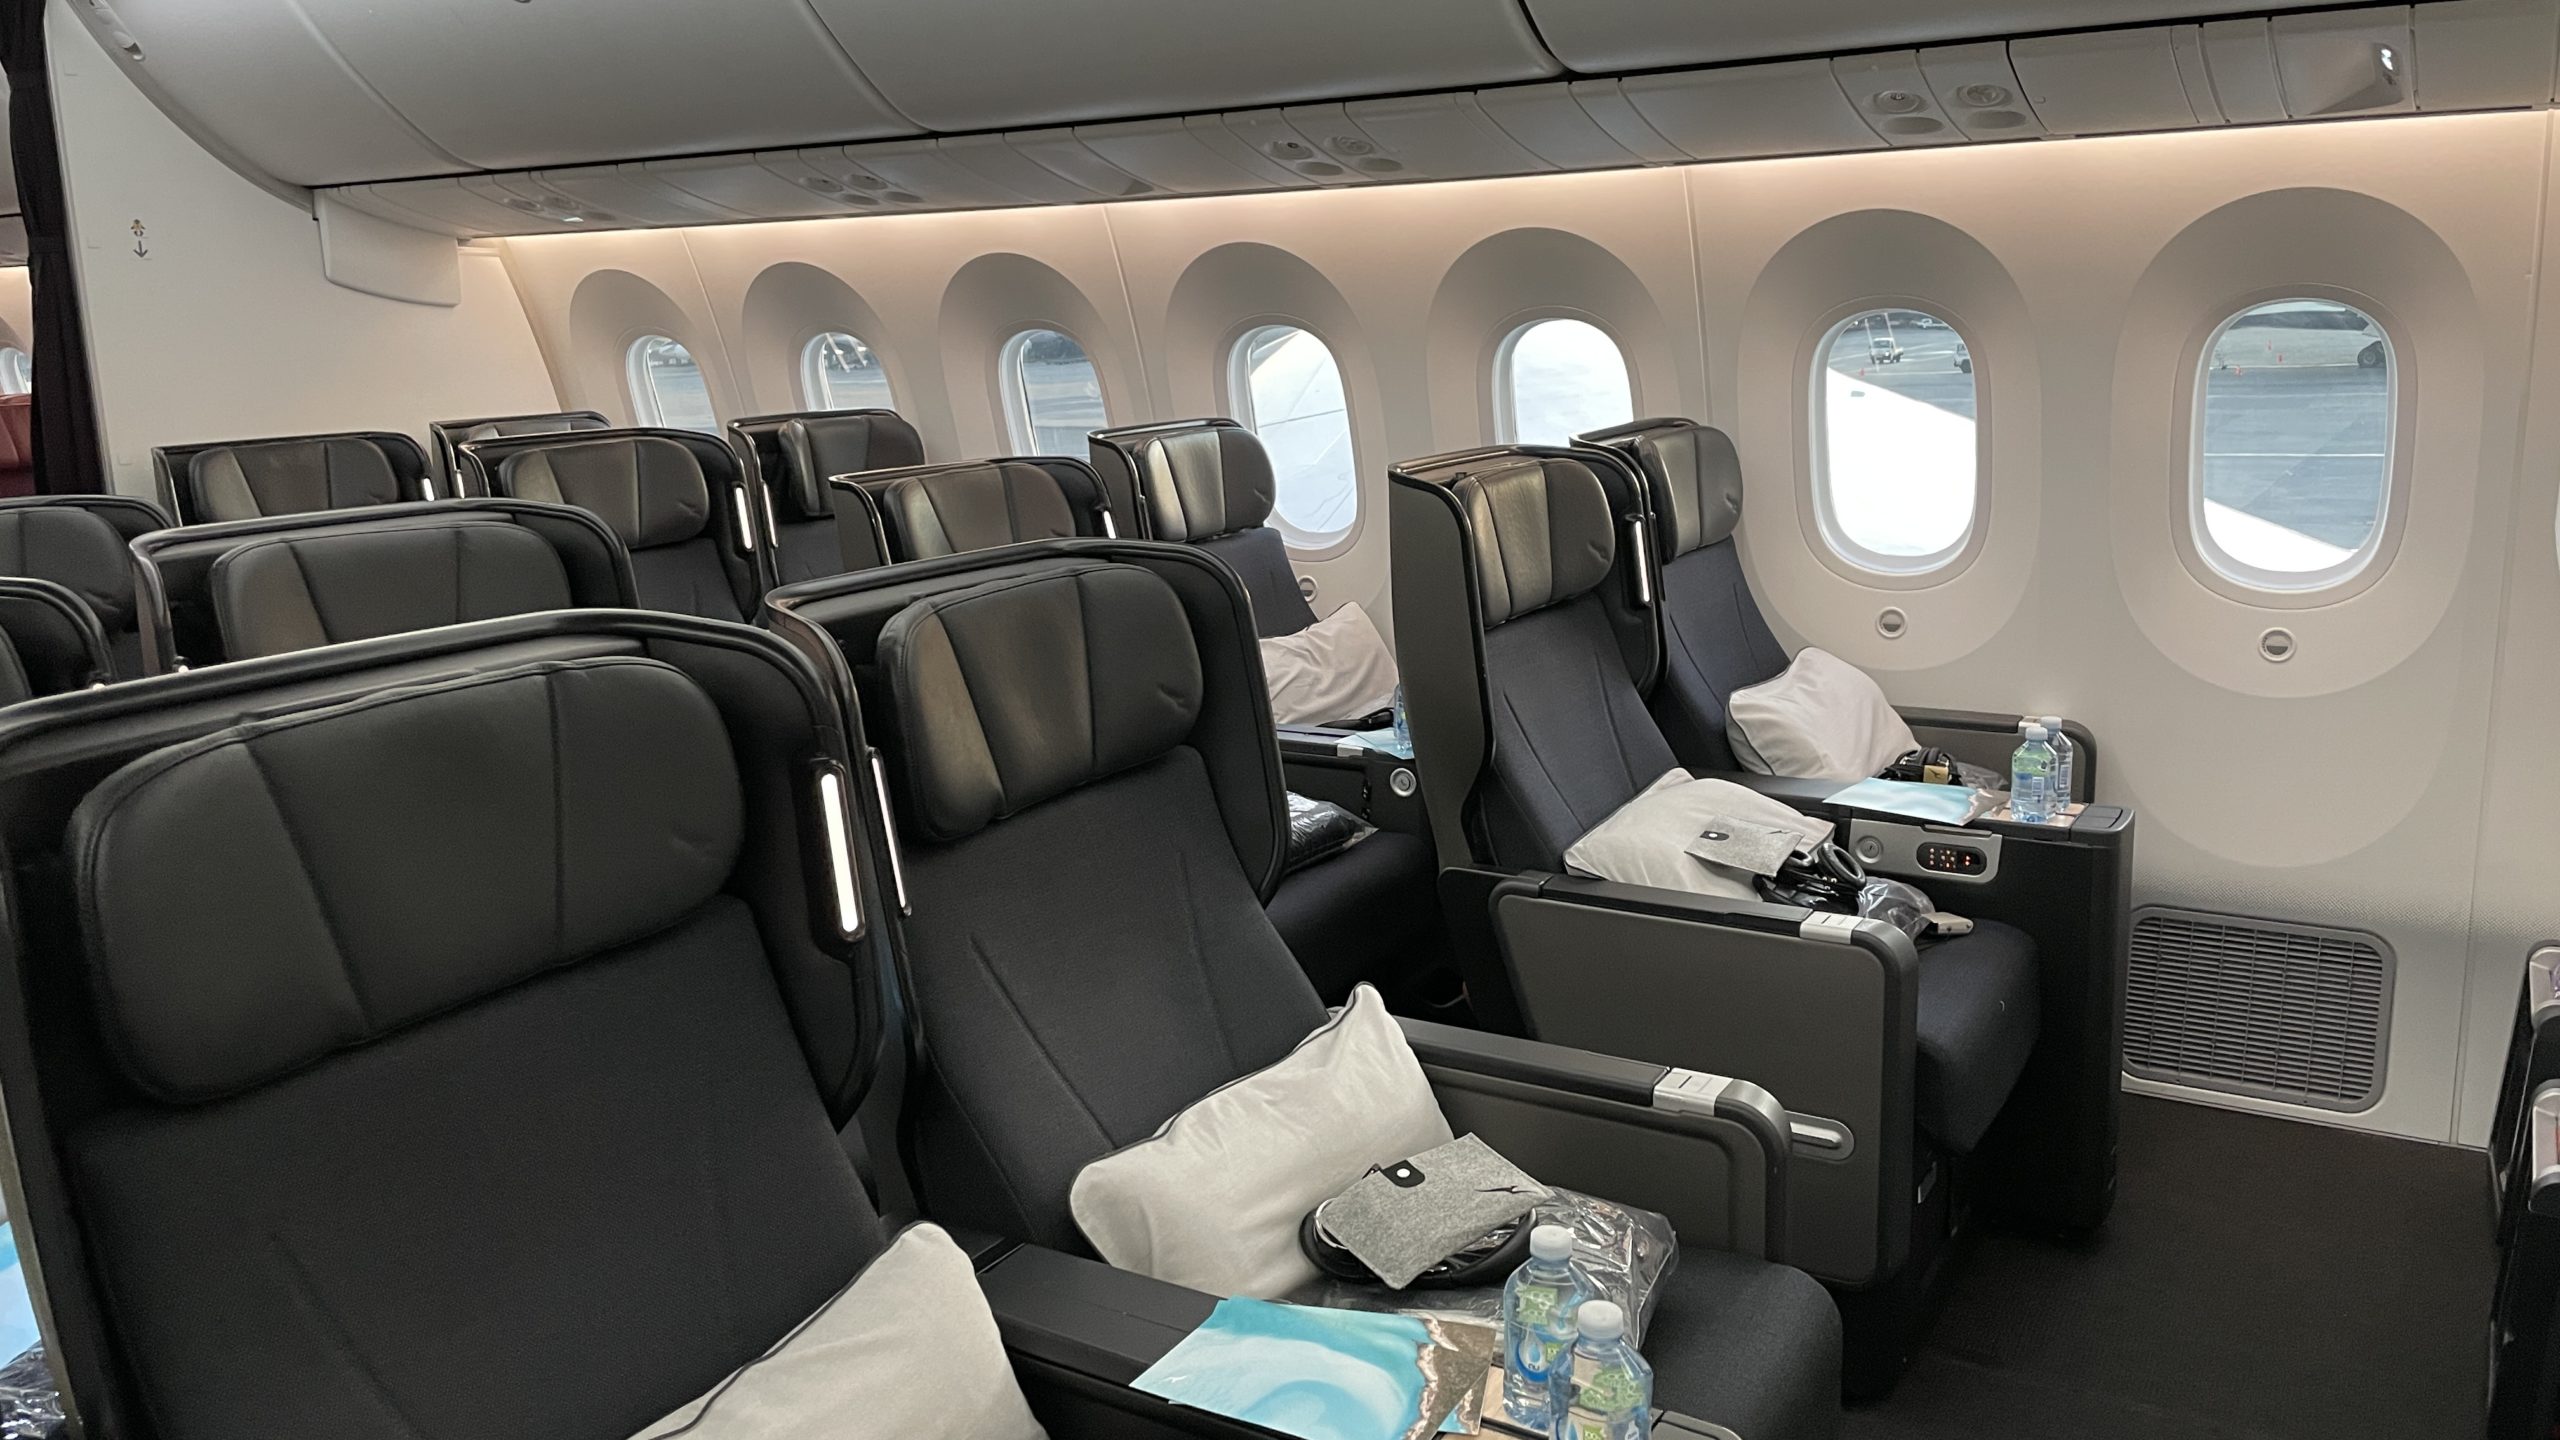 Qantas 787 Dreamliner Premium Economy Cabin Point Hacks by Daniel Sciberras